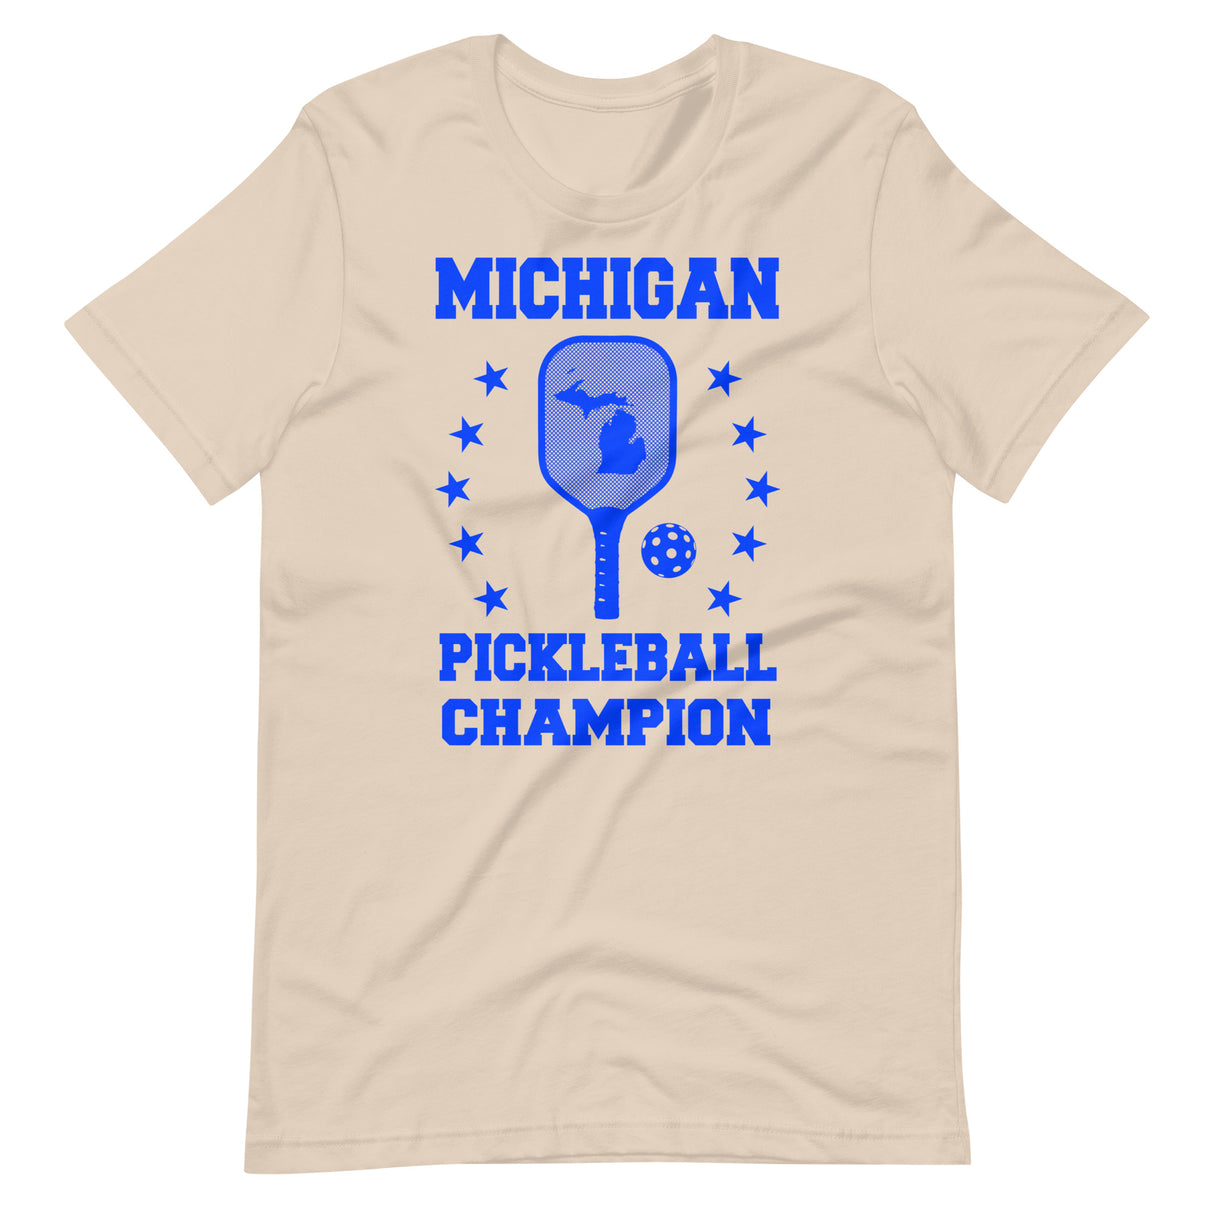 Michigan Pickleball Champion Shirt